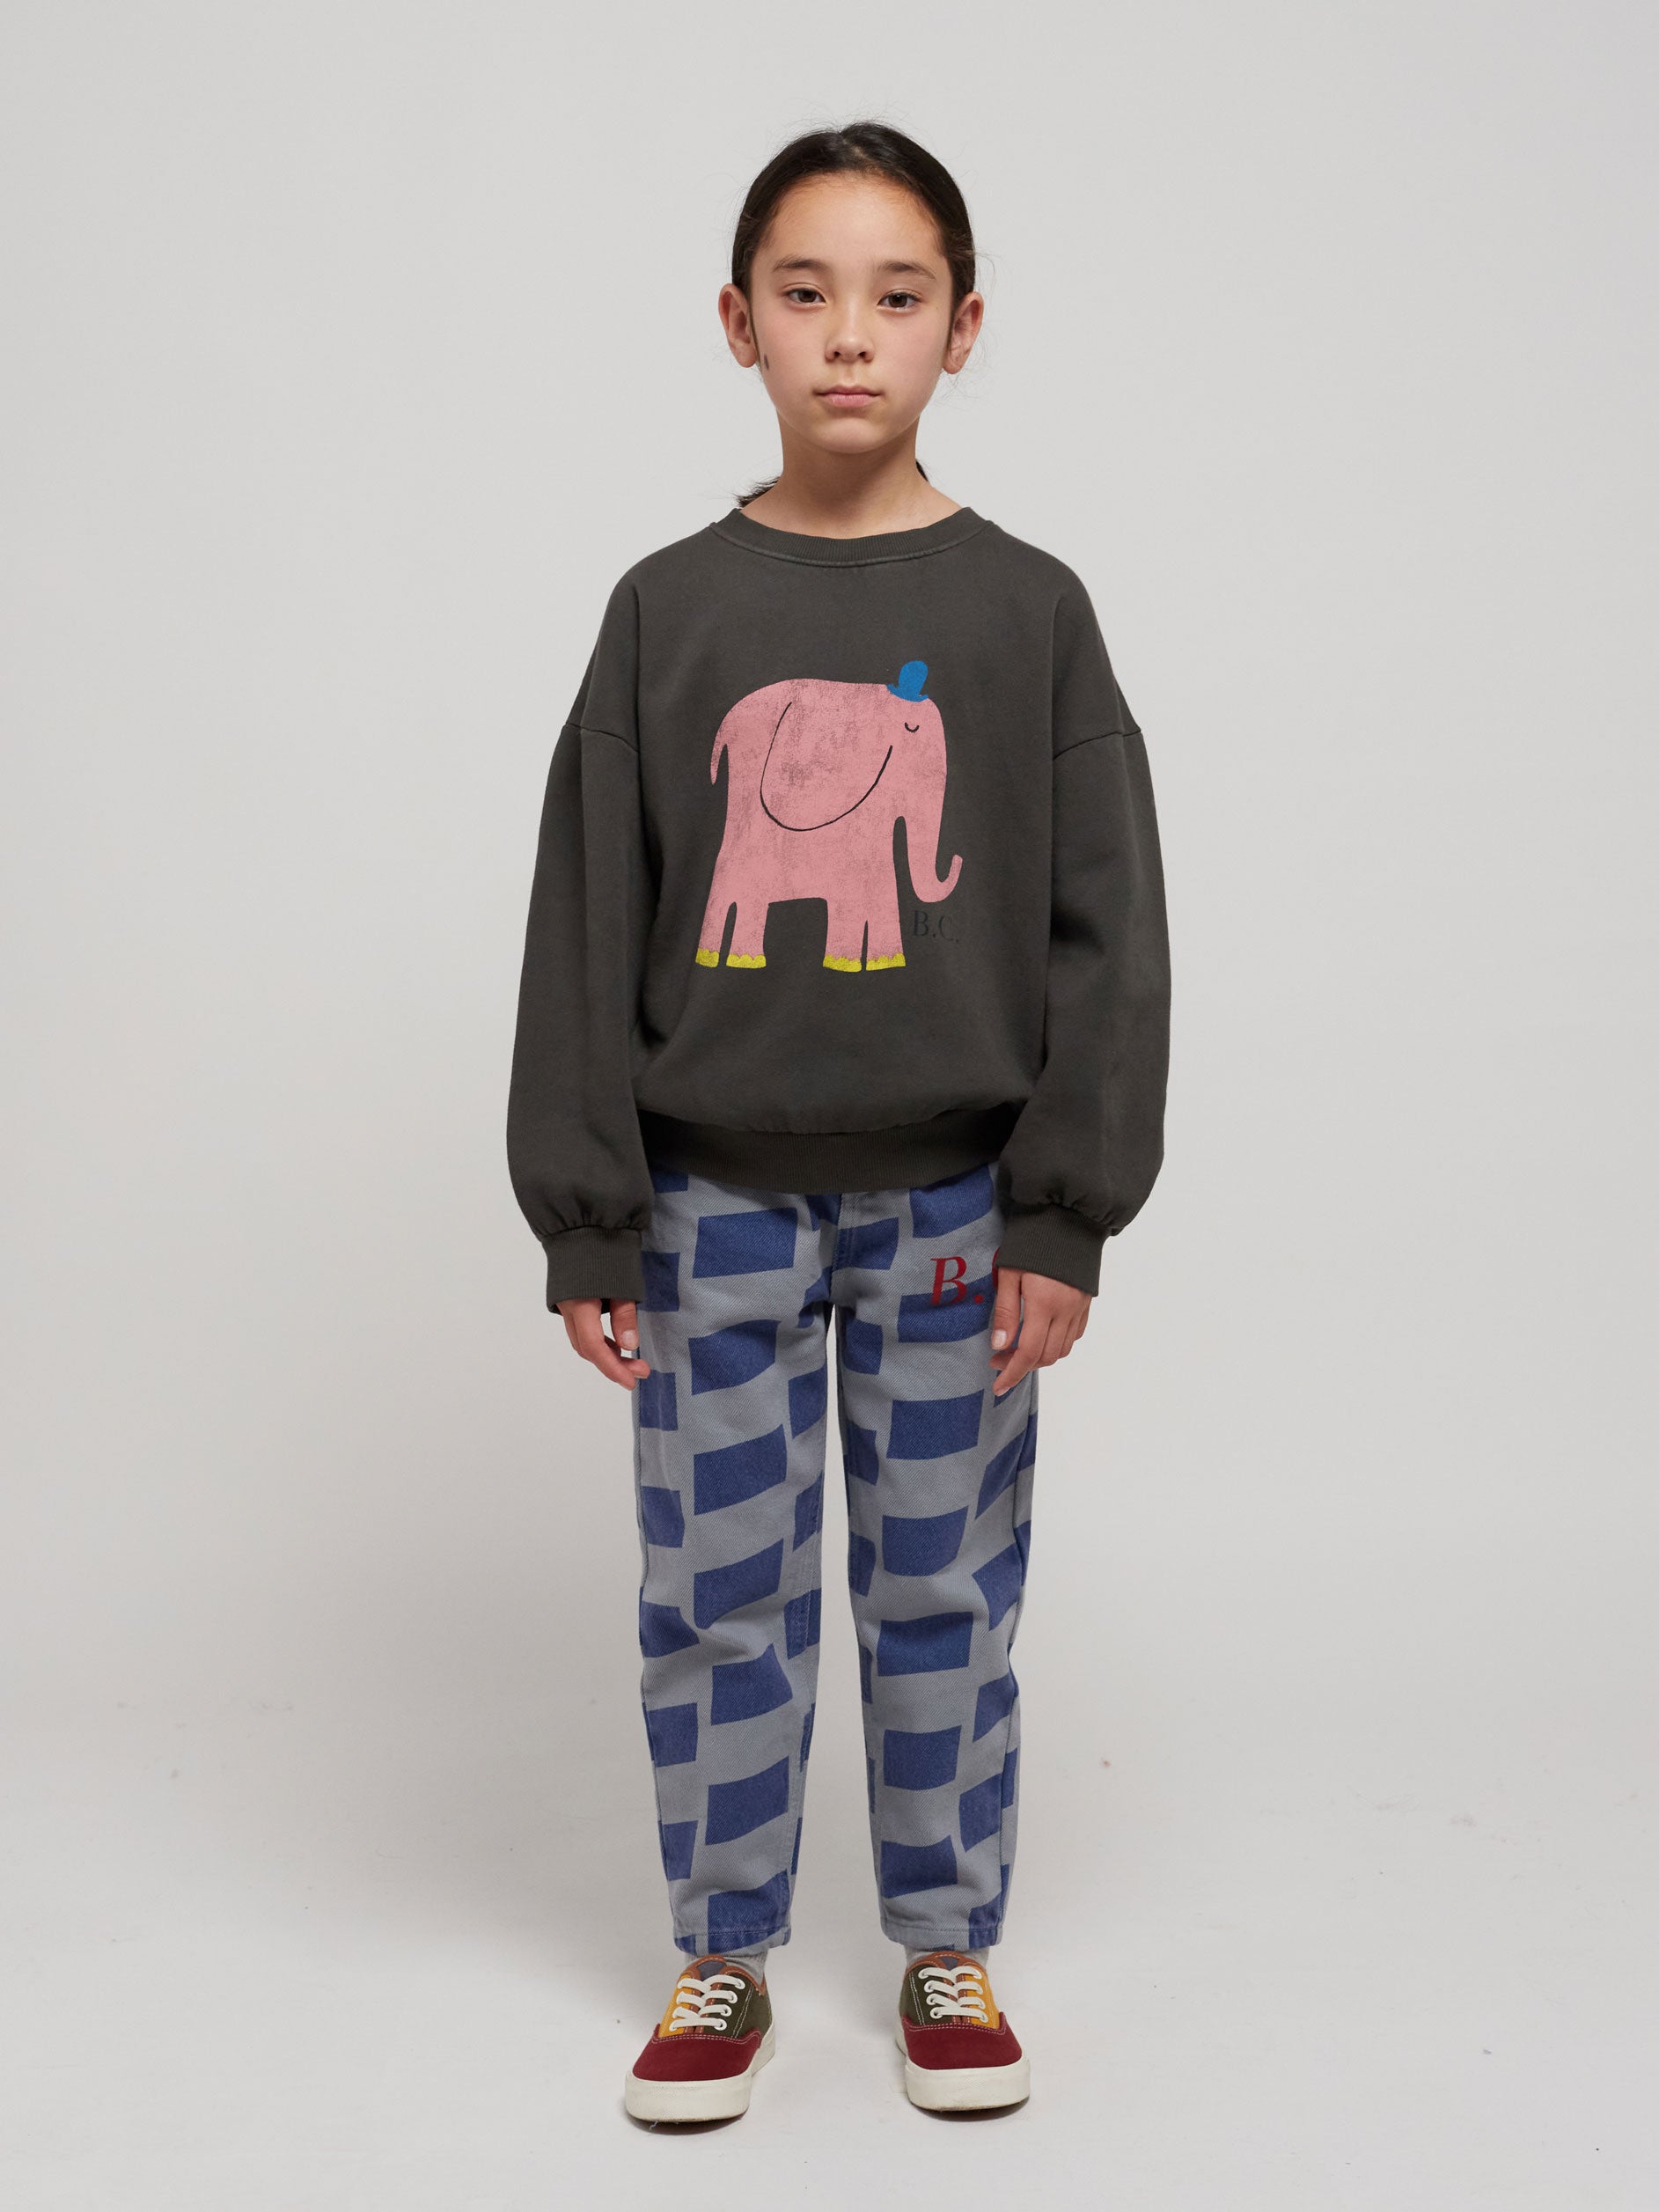 The Elephant sweatshirt – Choses Bobo